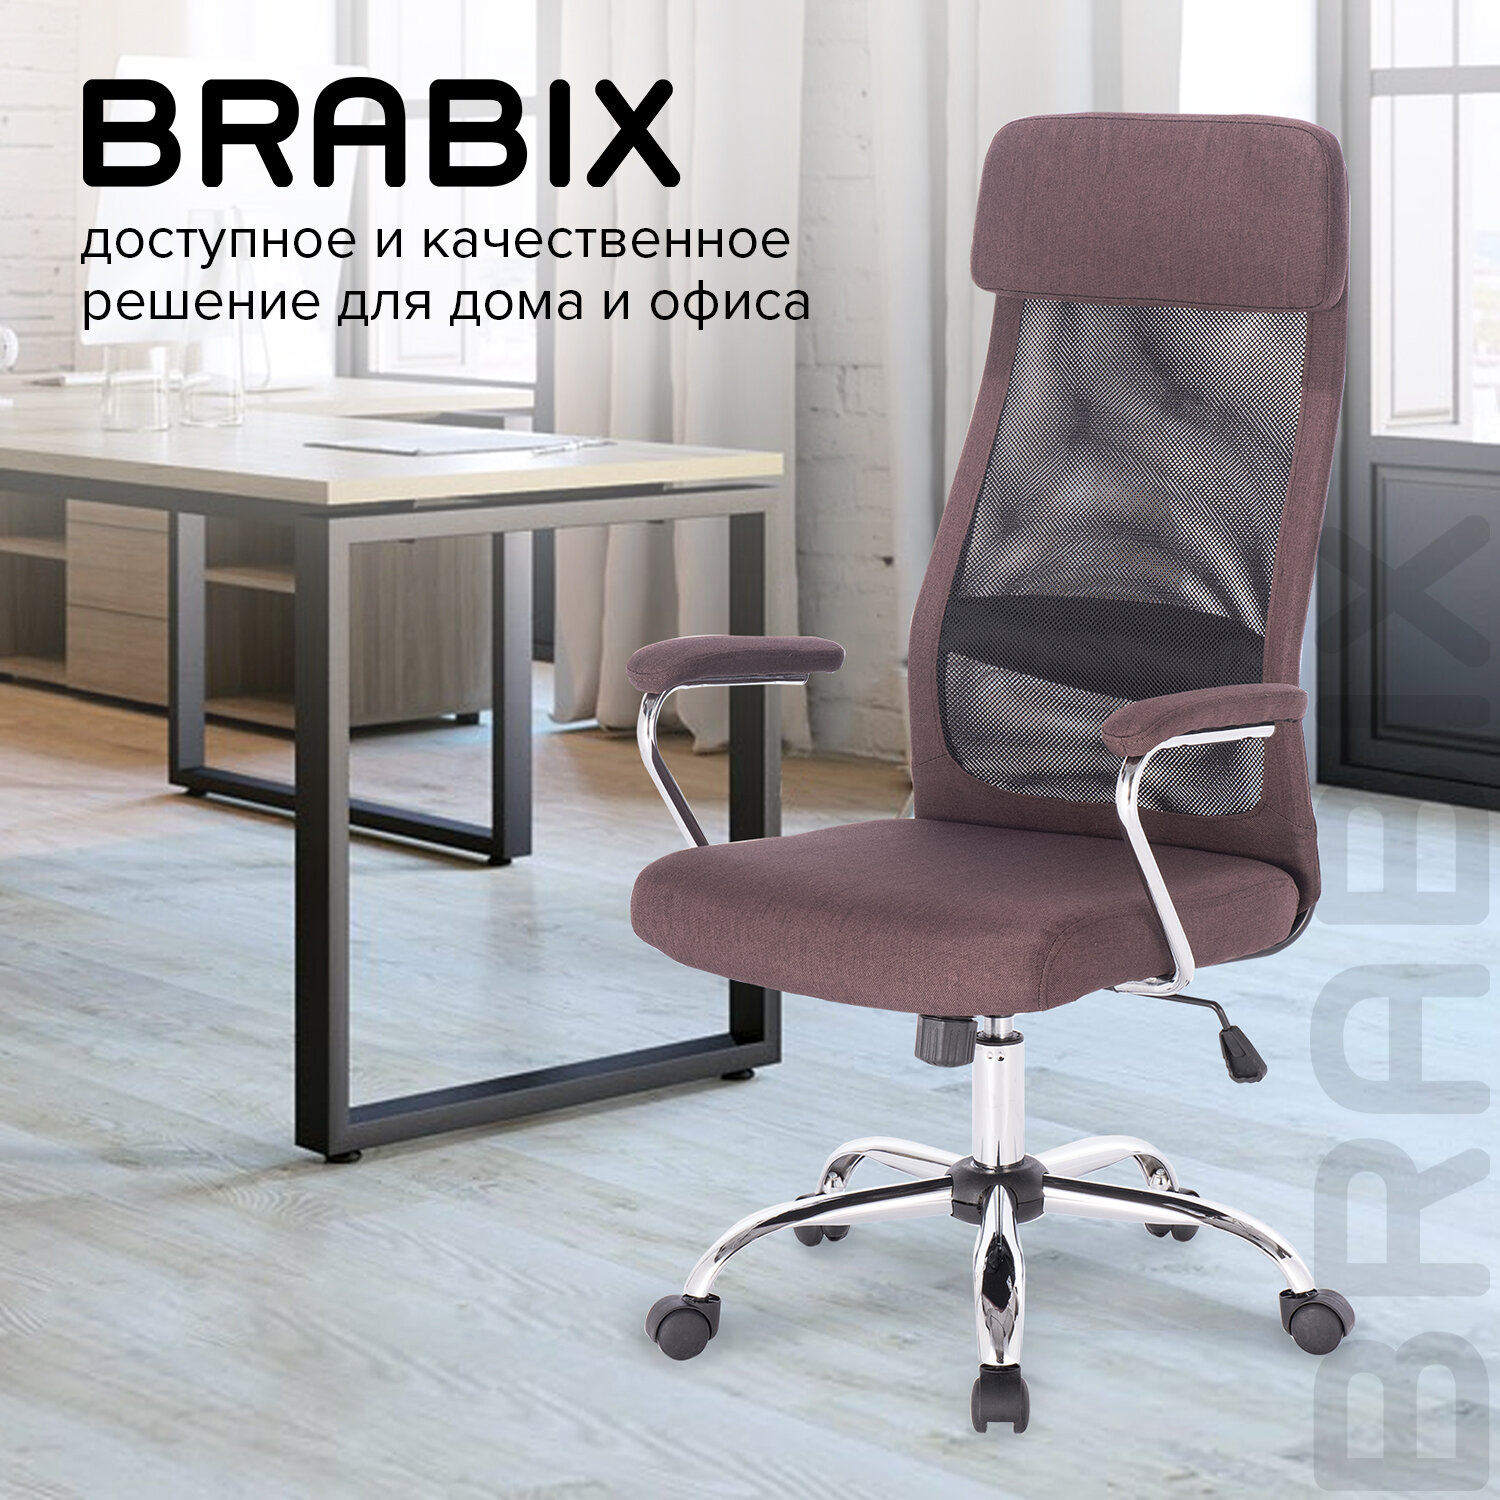 кресло brabix forward ex 570